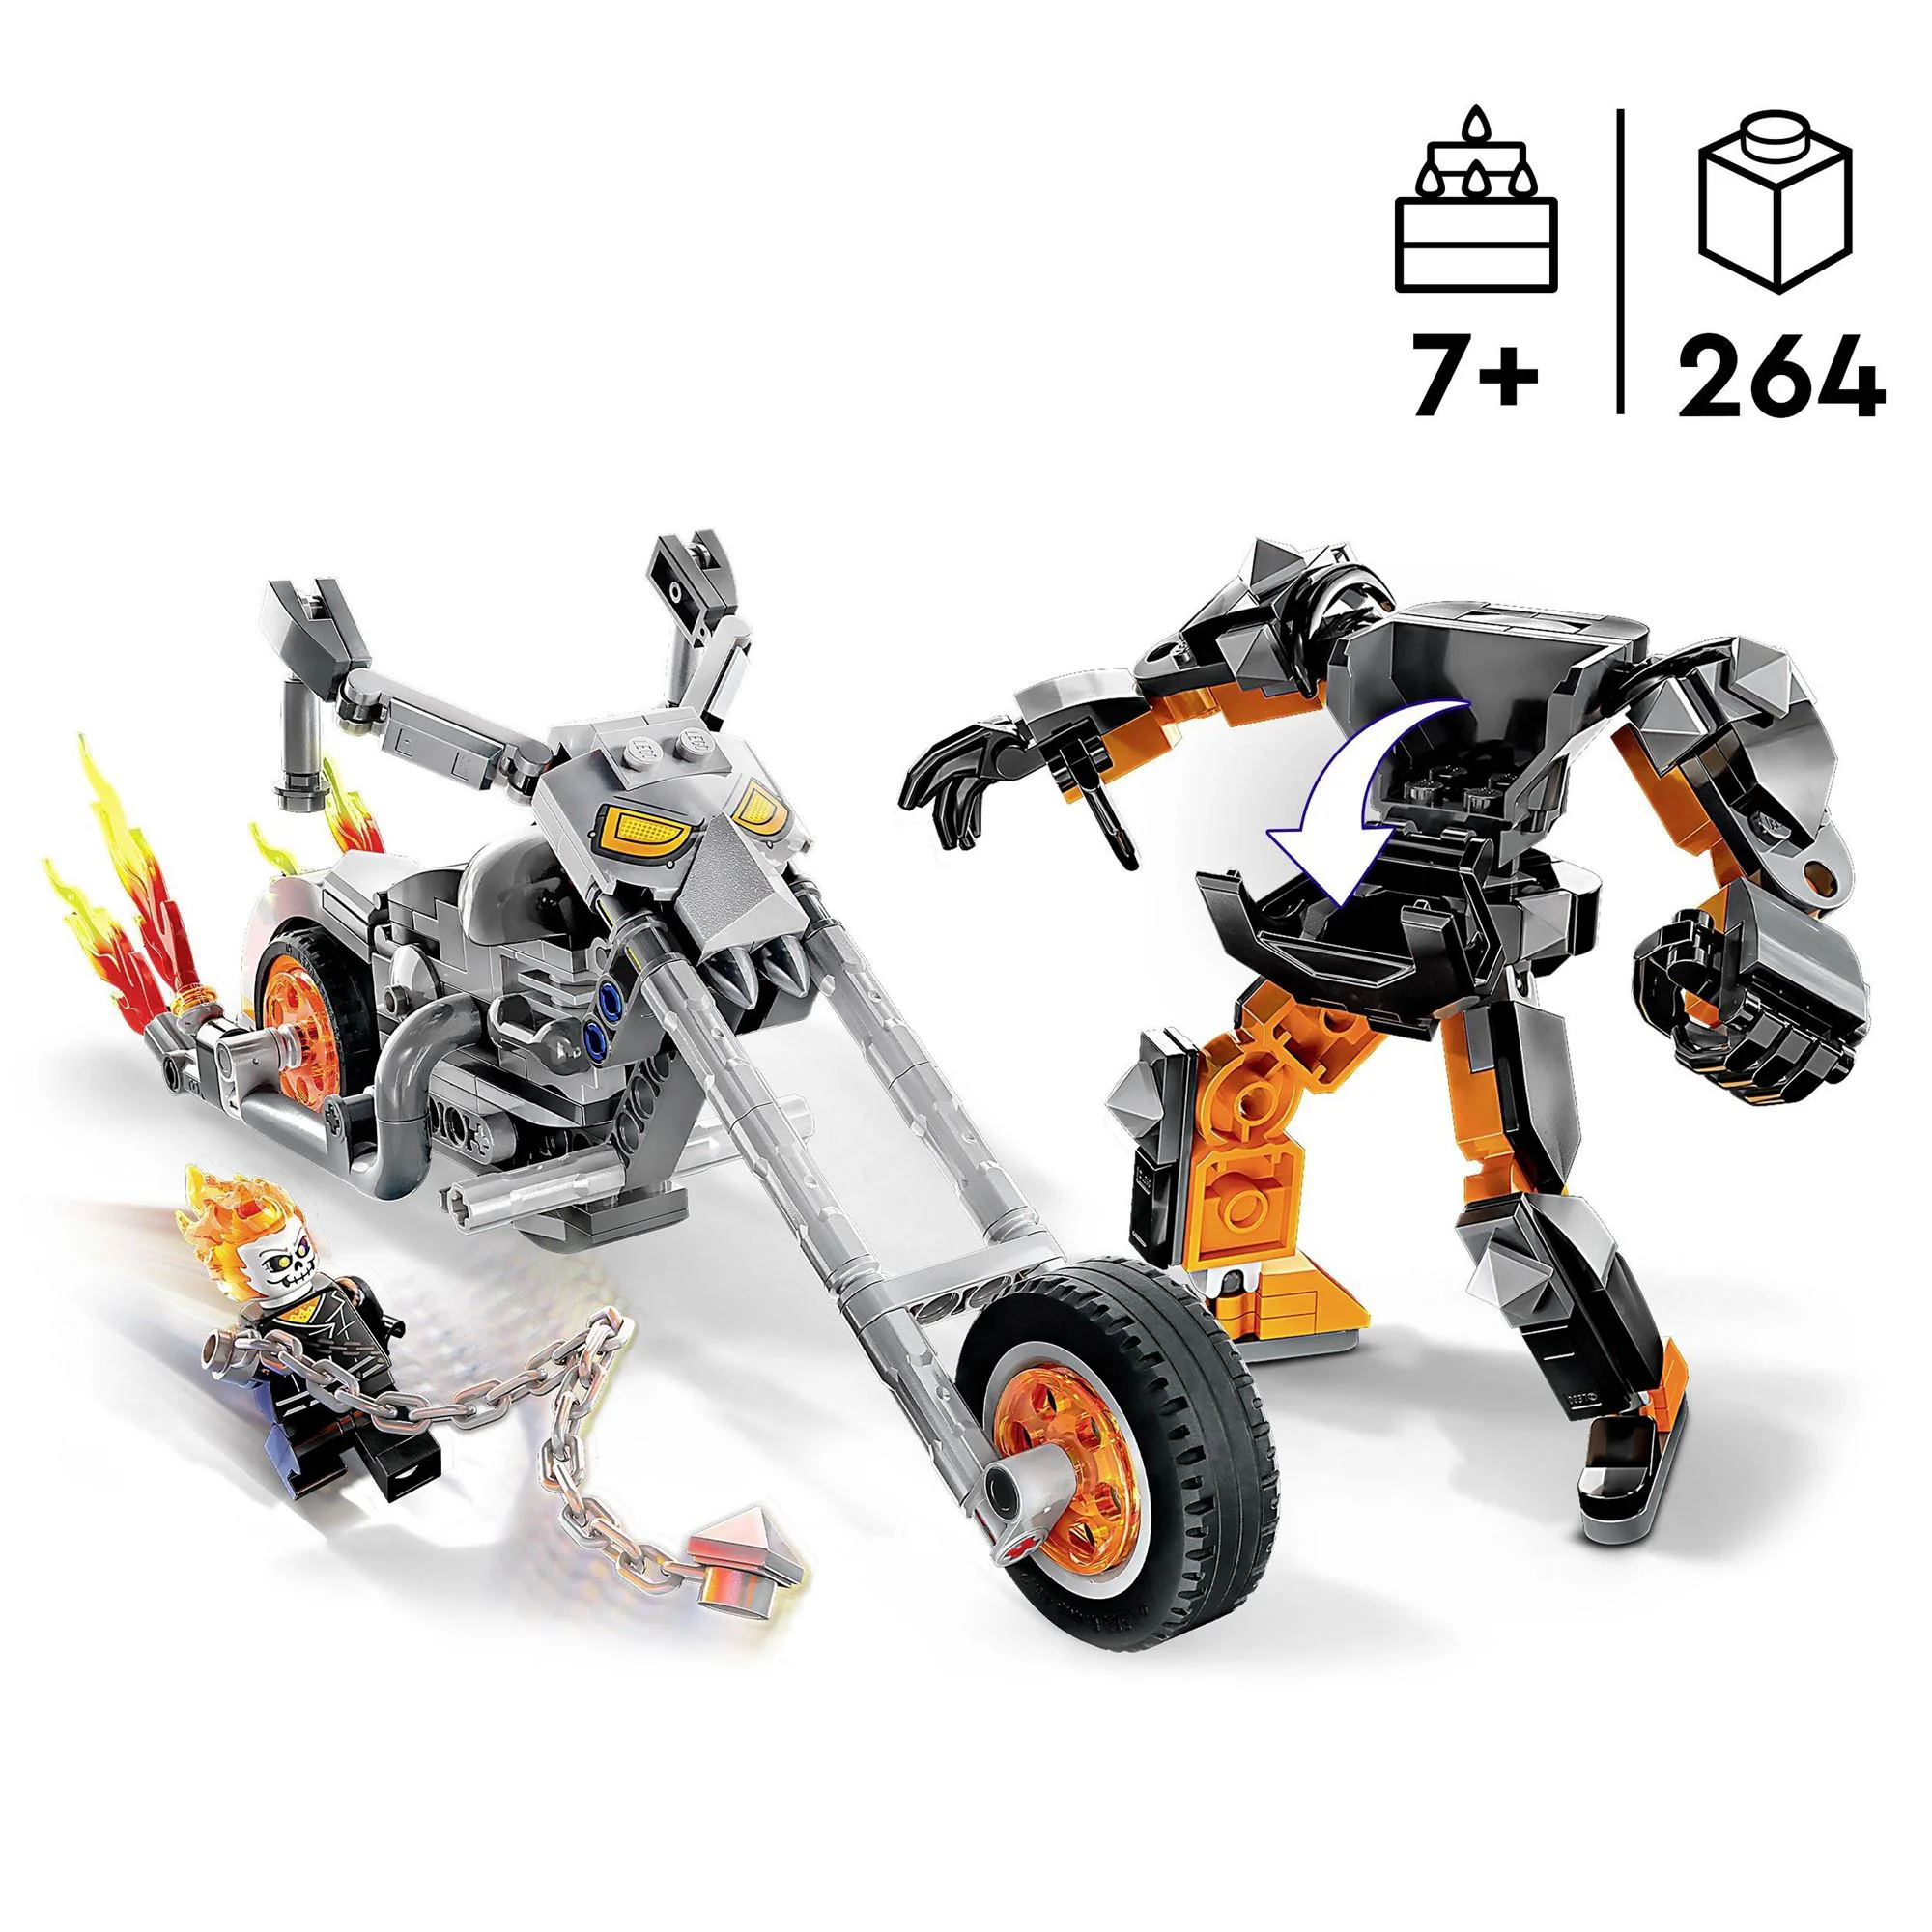 LEGO Marvel Ghost Rider Mech & Bike